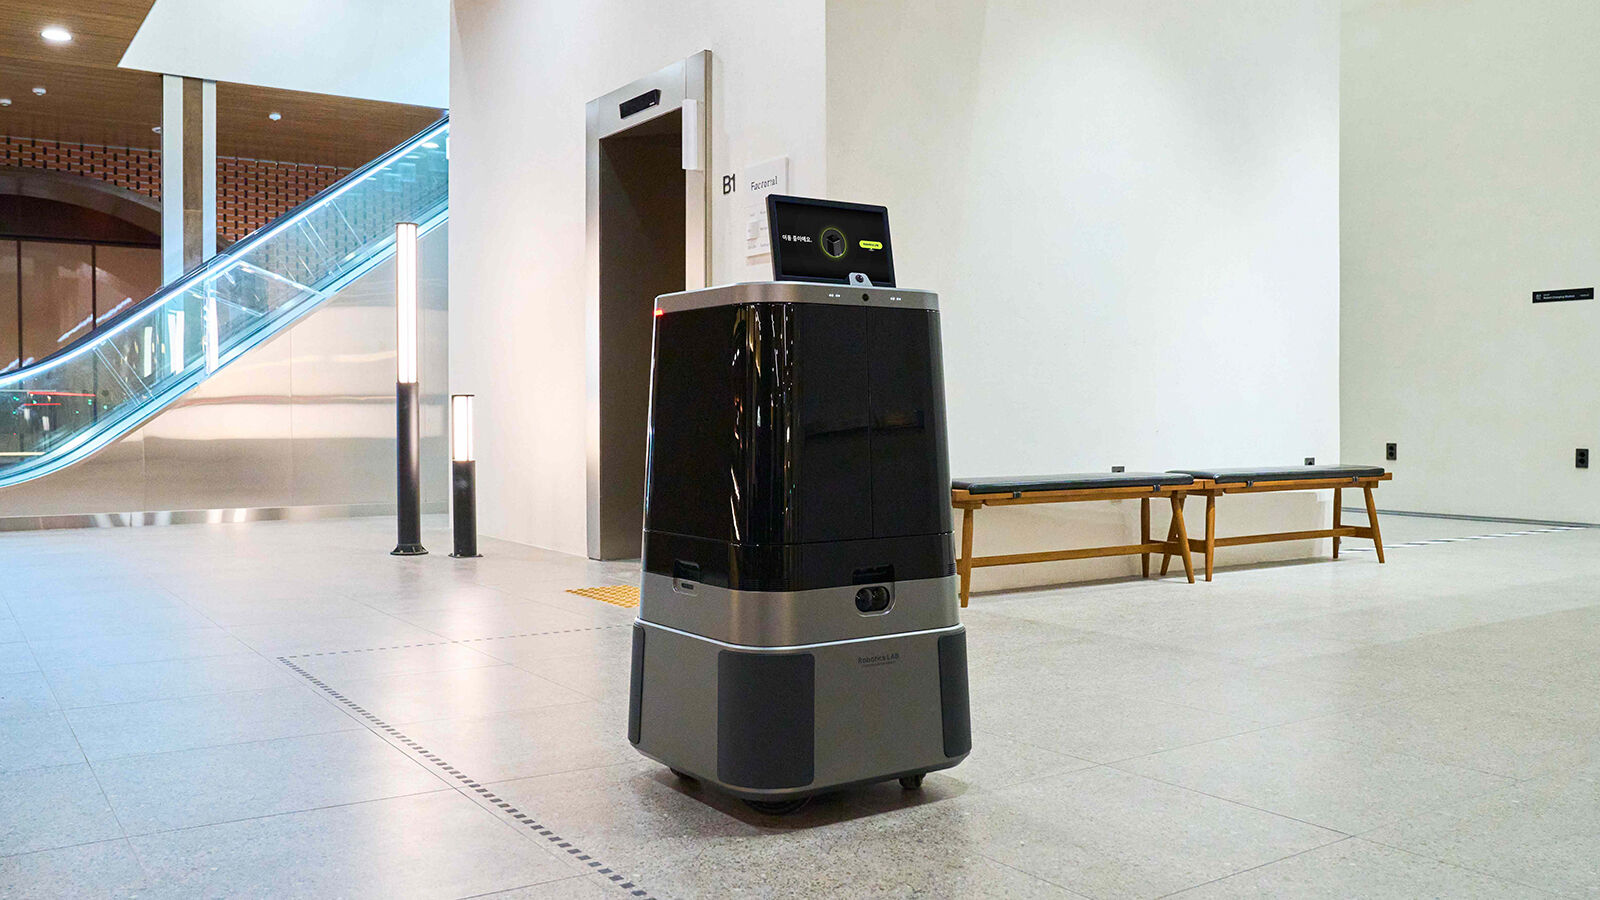 DAL-e Delivery robot navigates autonomously across the building, providing quick and efficient delivery services to building occupants